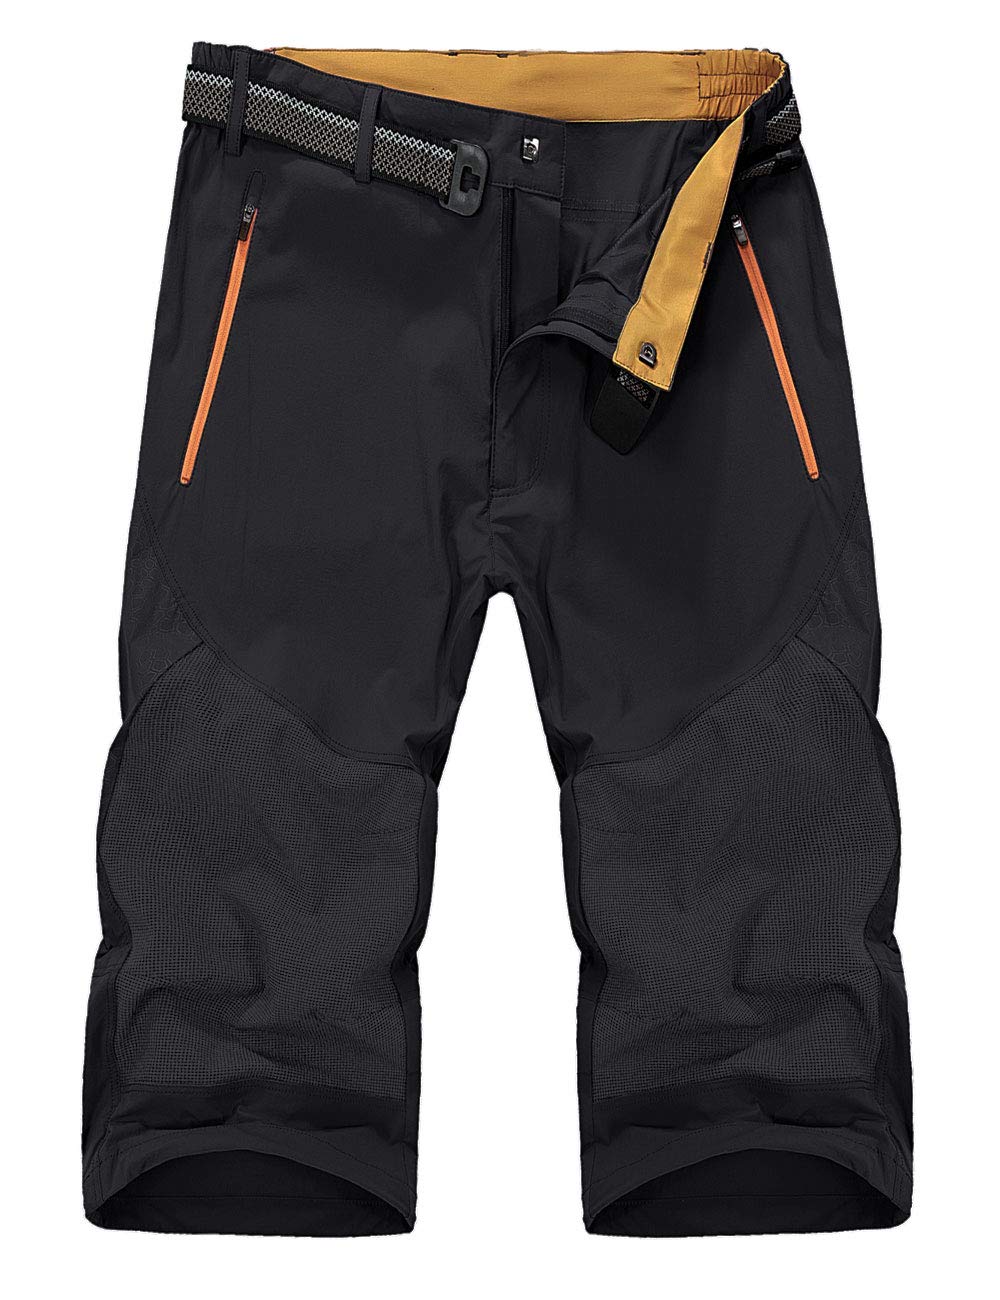 TACVASEN Men's Cargo 3/4 Long Shorts Quick Dry Below Knee Capri Slim FIit Pants Black, 34